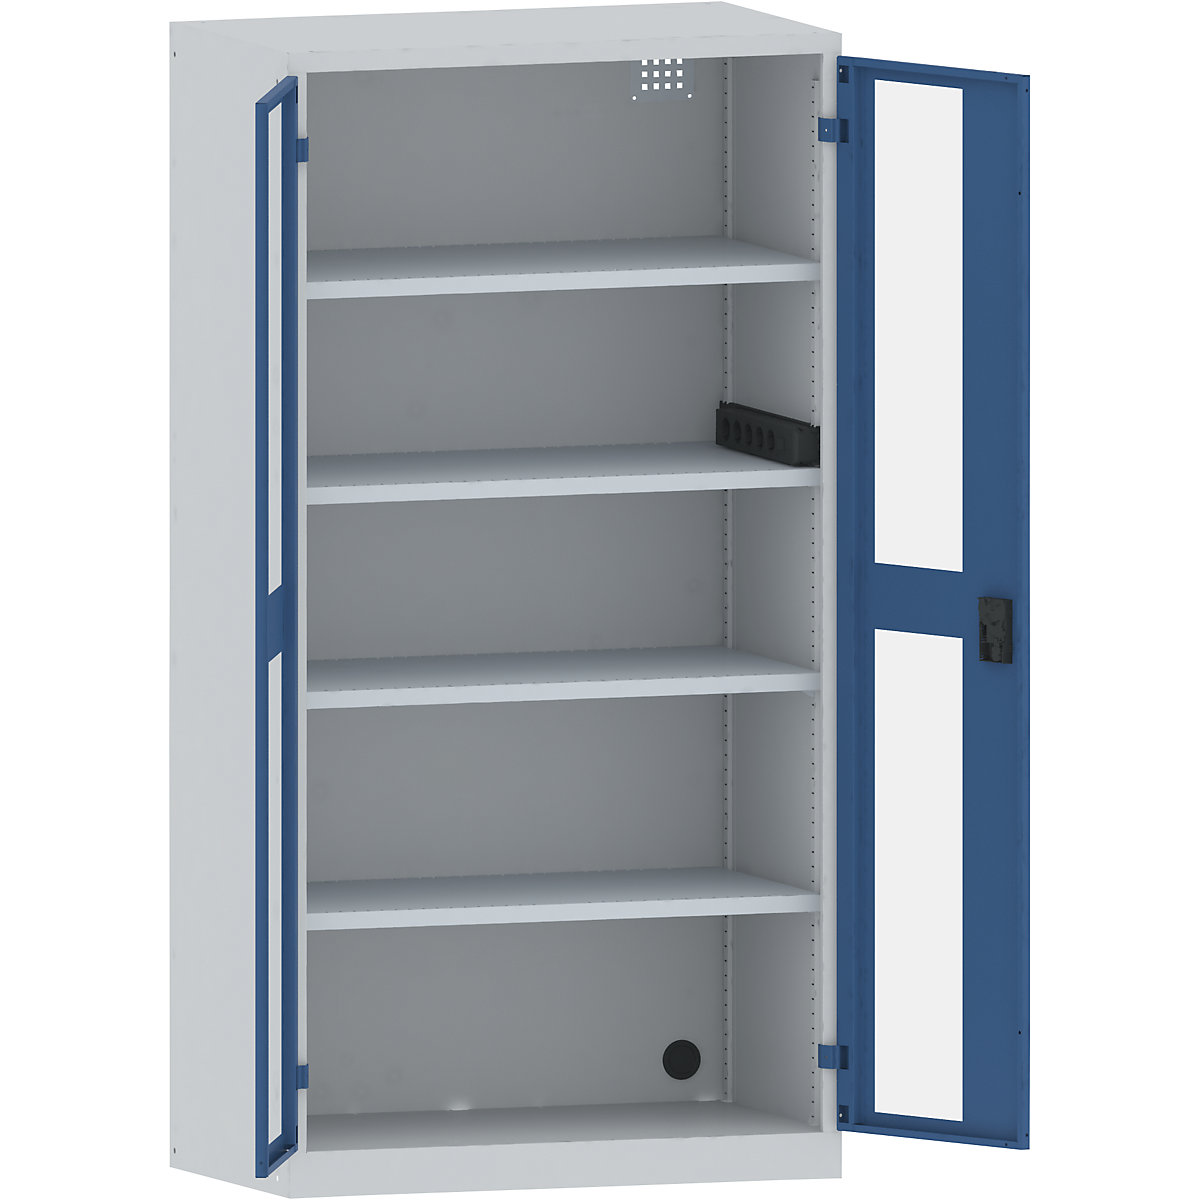 Battery charging cabinet – LISTA, 4 shelves, vision panel doors, power strip at side, grey / blue-12